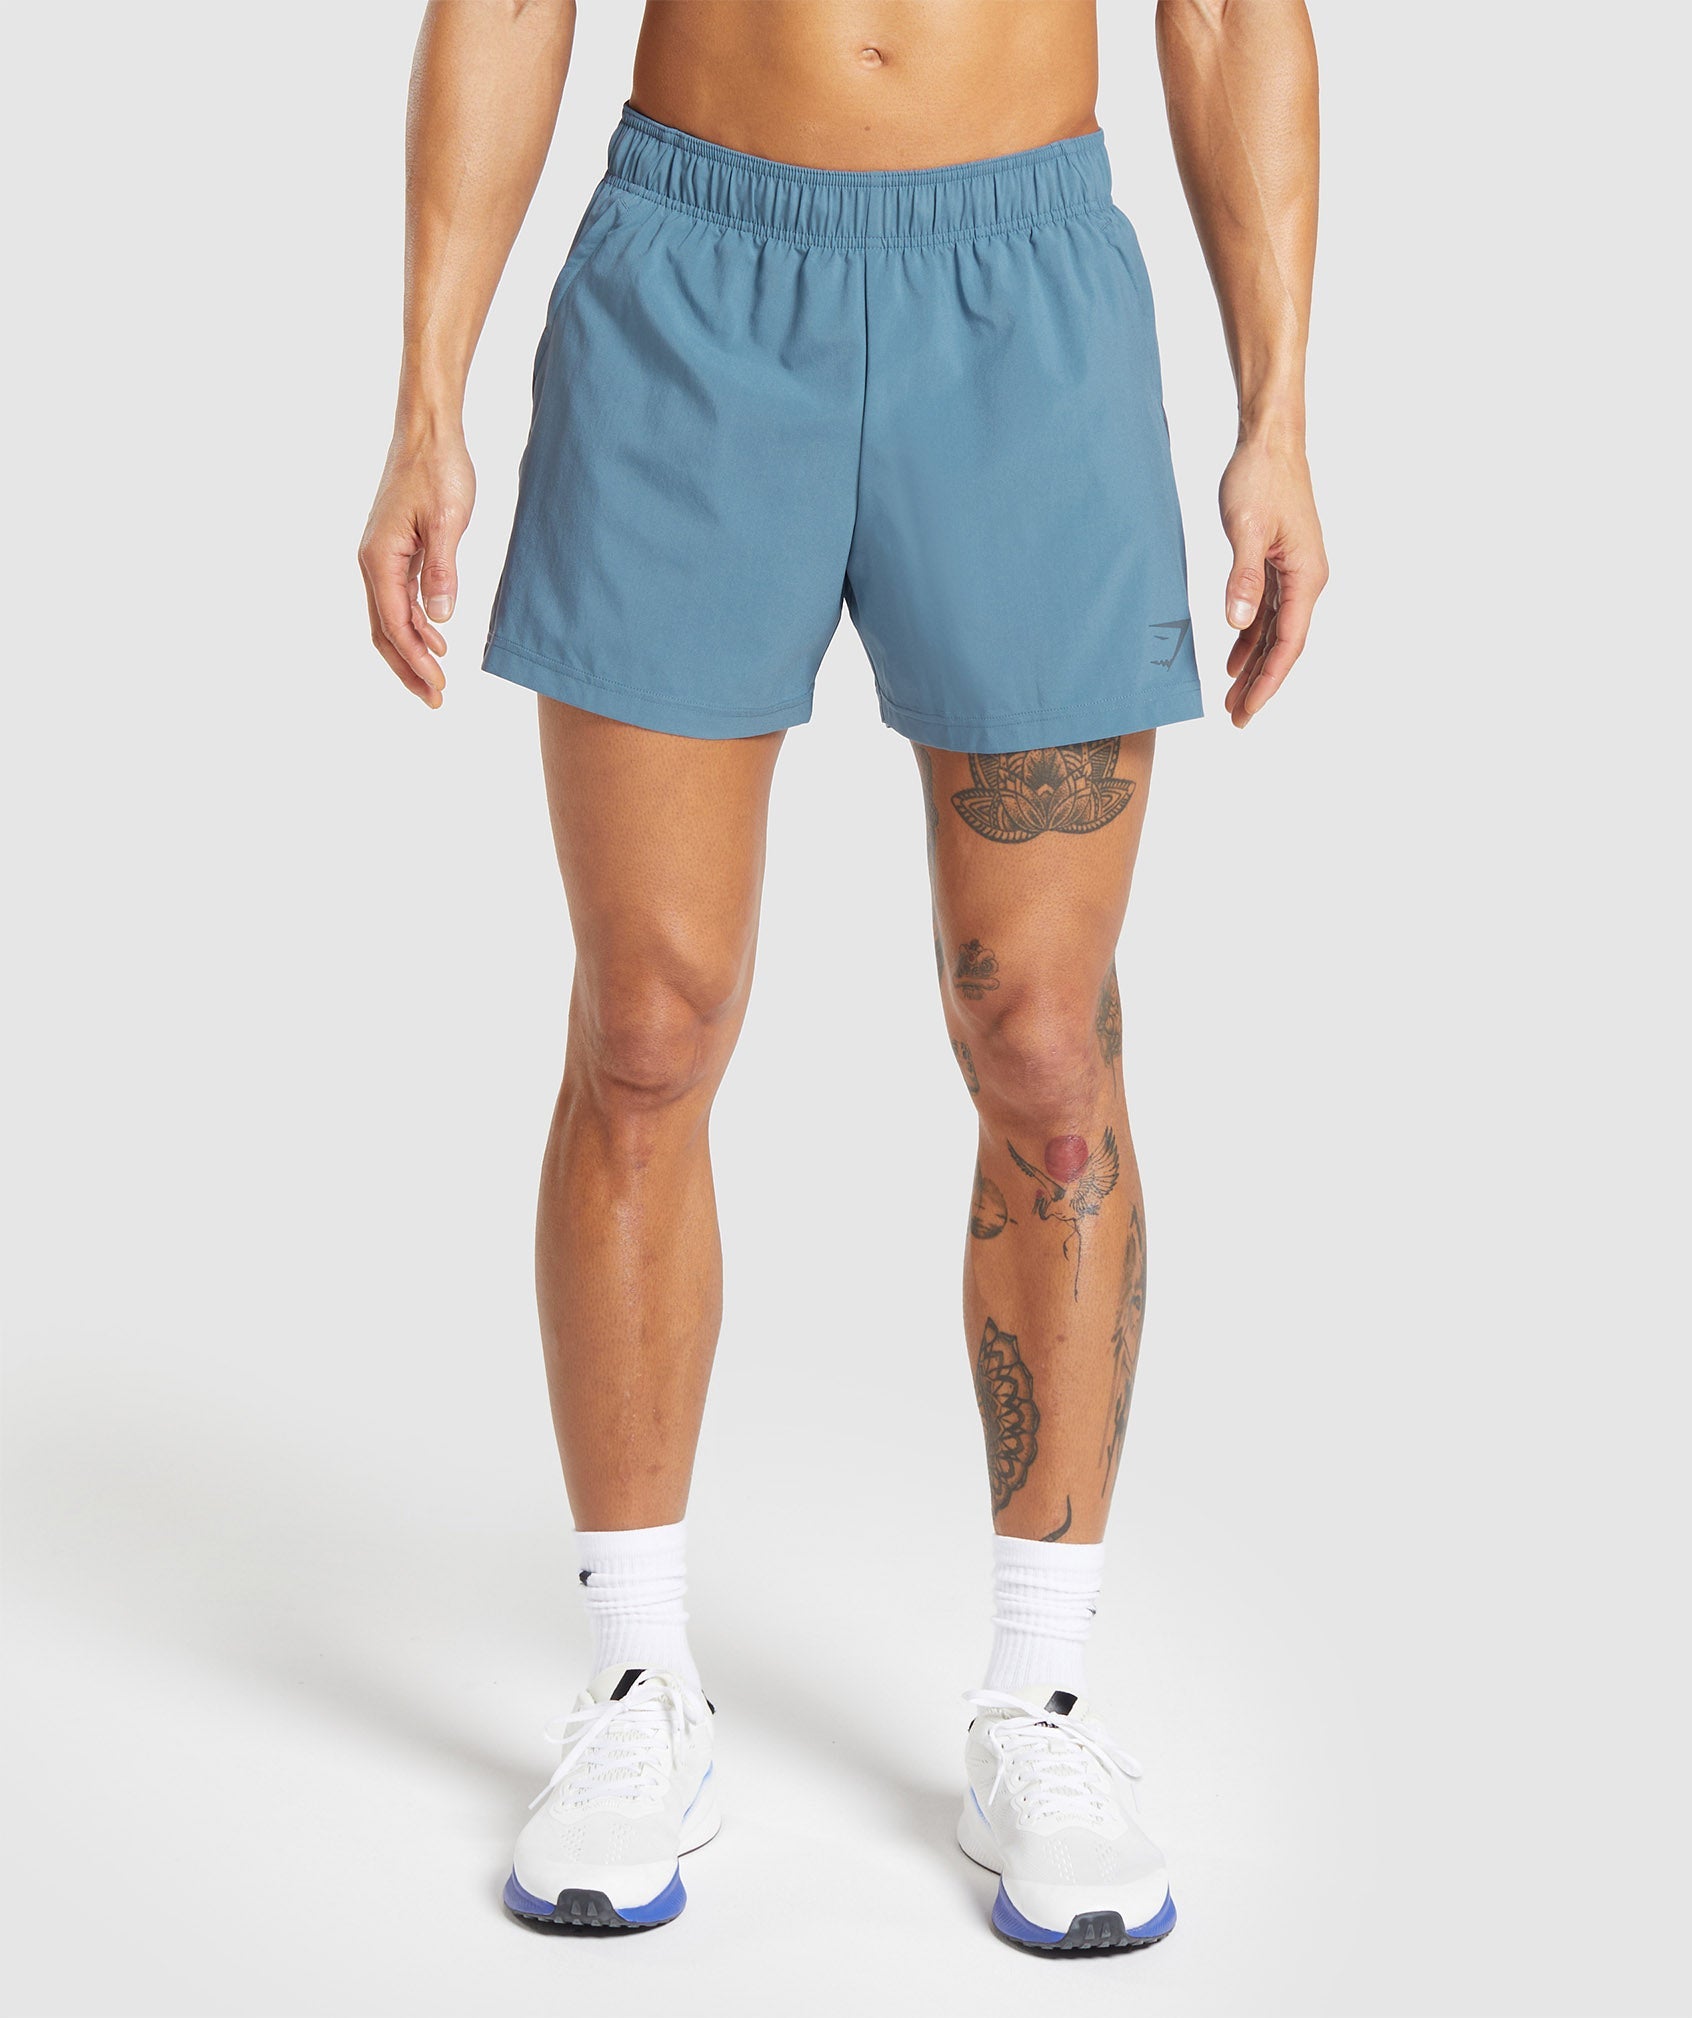 Gymshark Sport 5 Shorts - Faded Blue/Titanium Blue